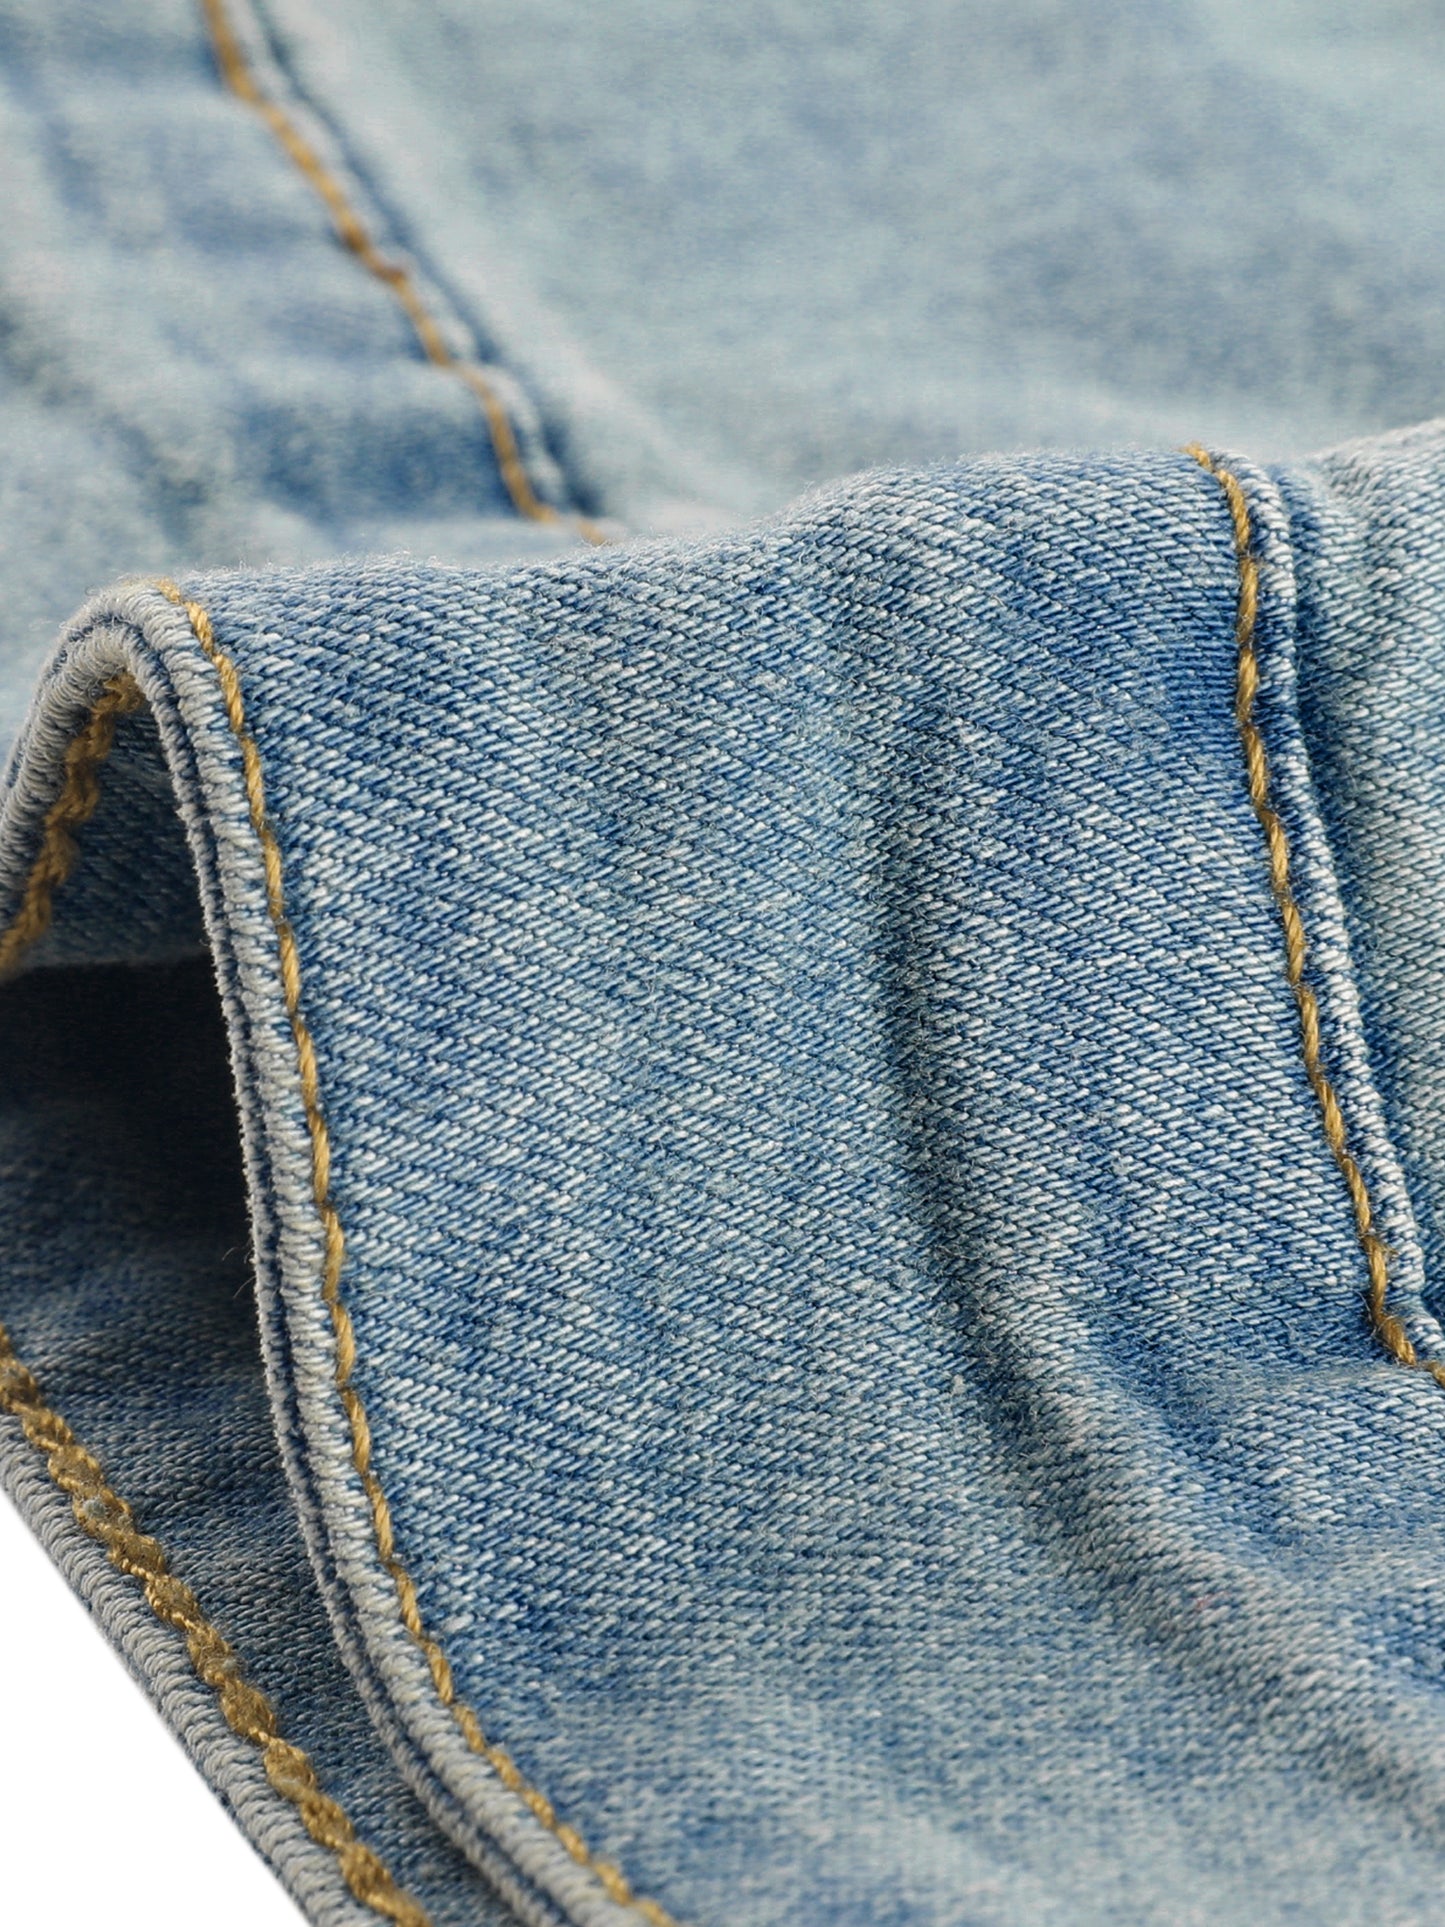 Agnes Orinda Plus Size Stitching Button Front Washed Denim Jacket Light Blue